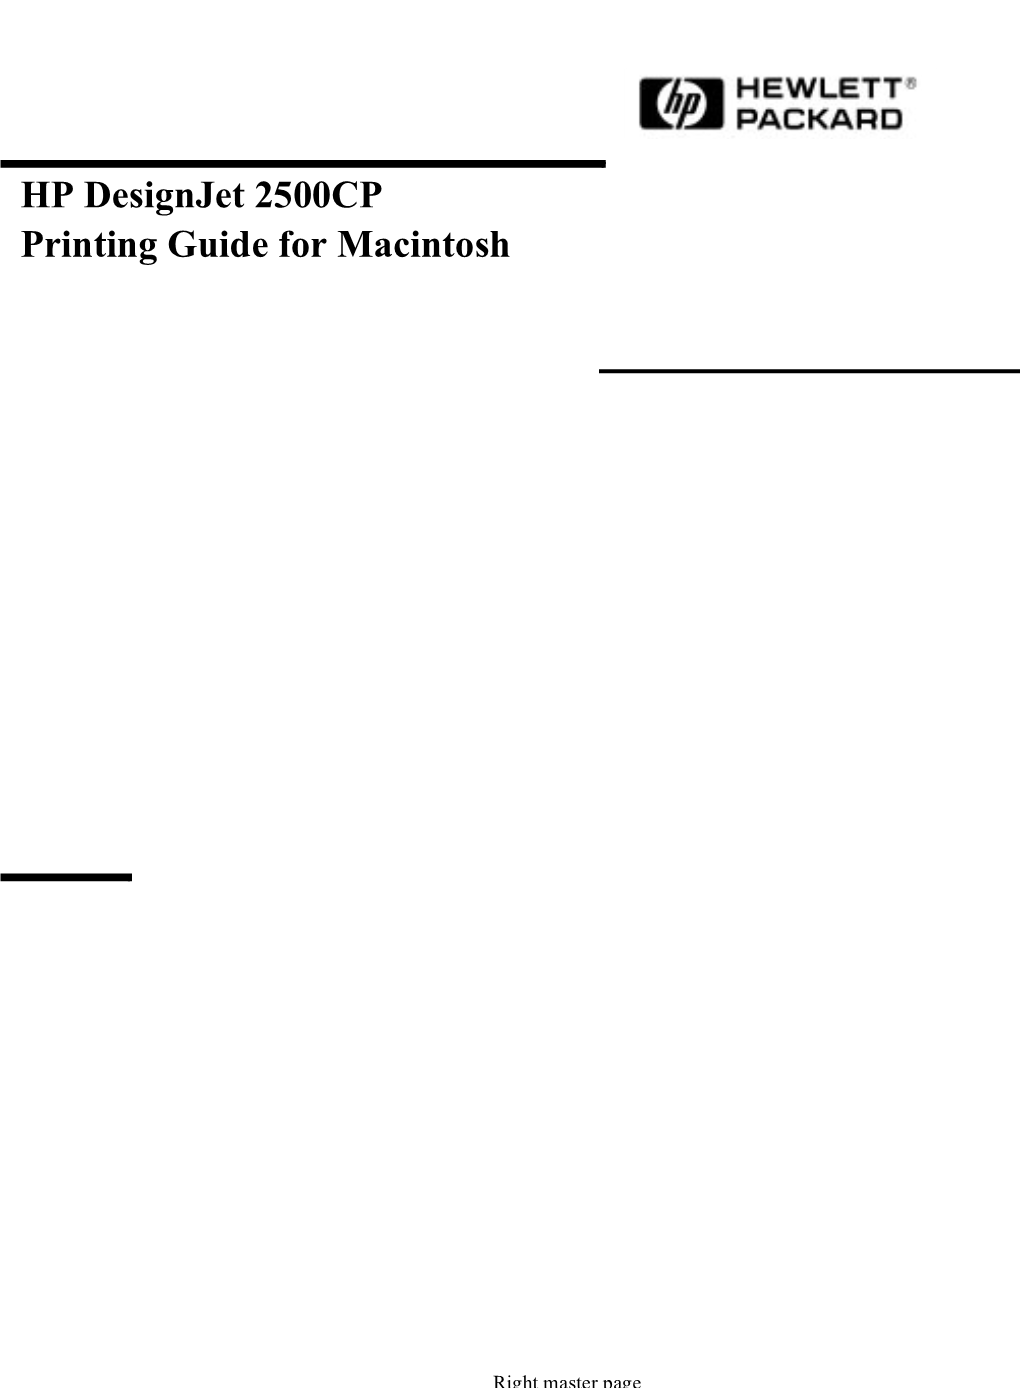 HP Designjet 2500CP Printing Guide for Macintosh, C4704-90091